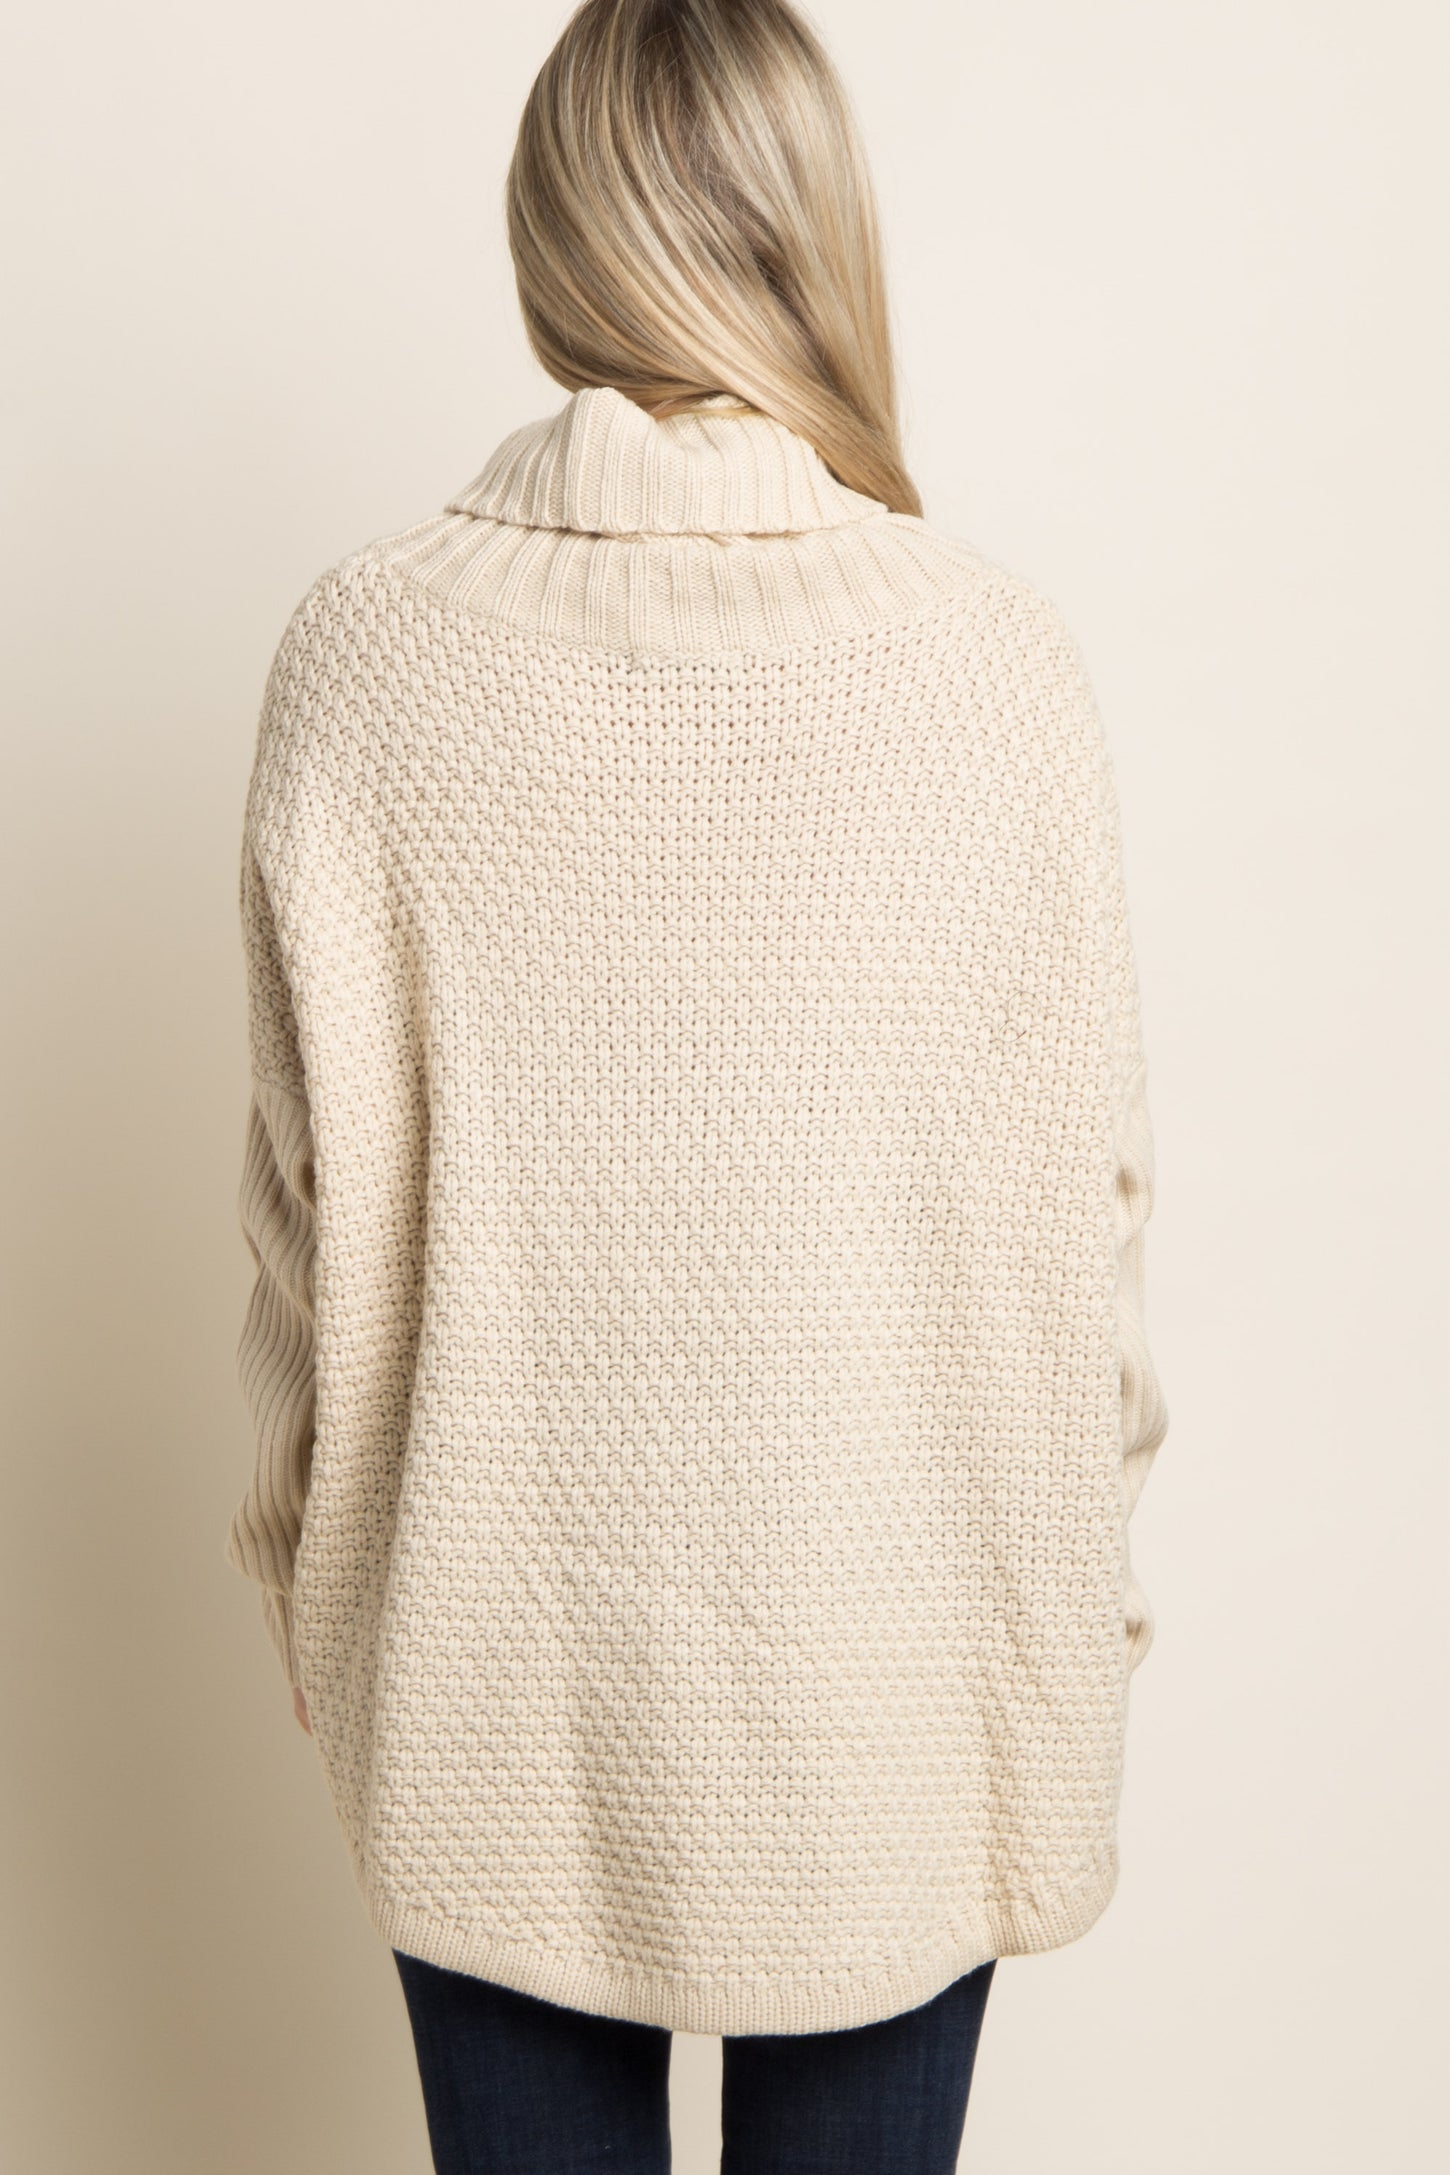 Beige Cowl Neck Knit Maternity Sweater